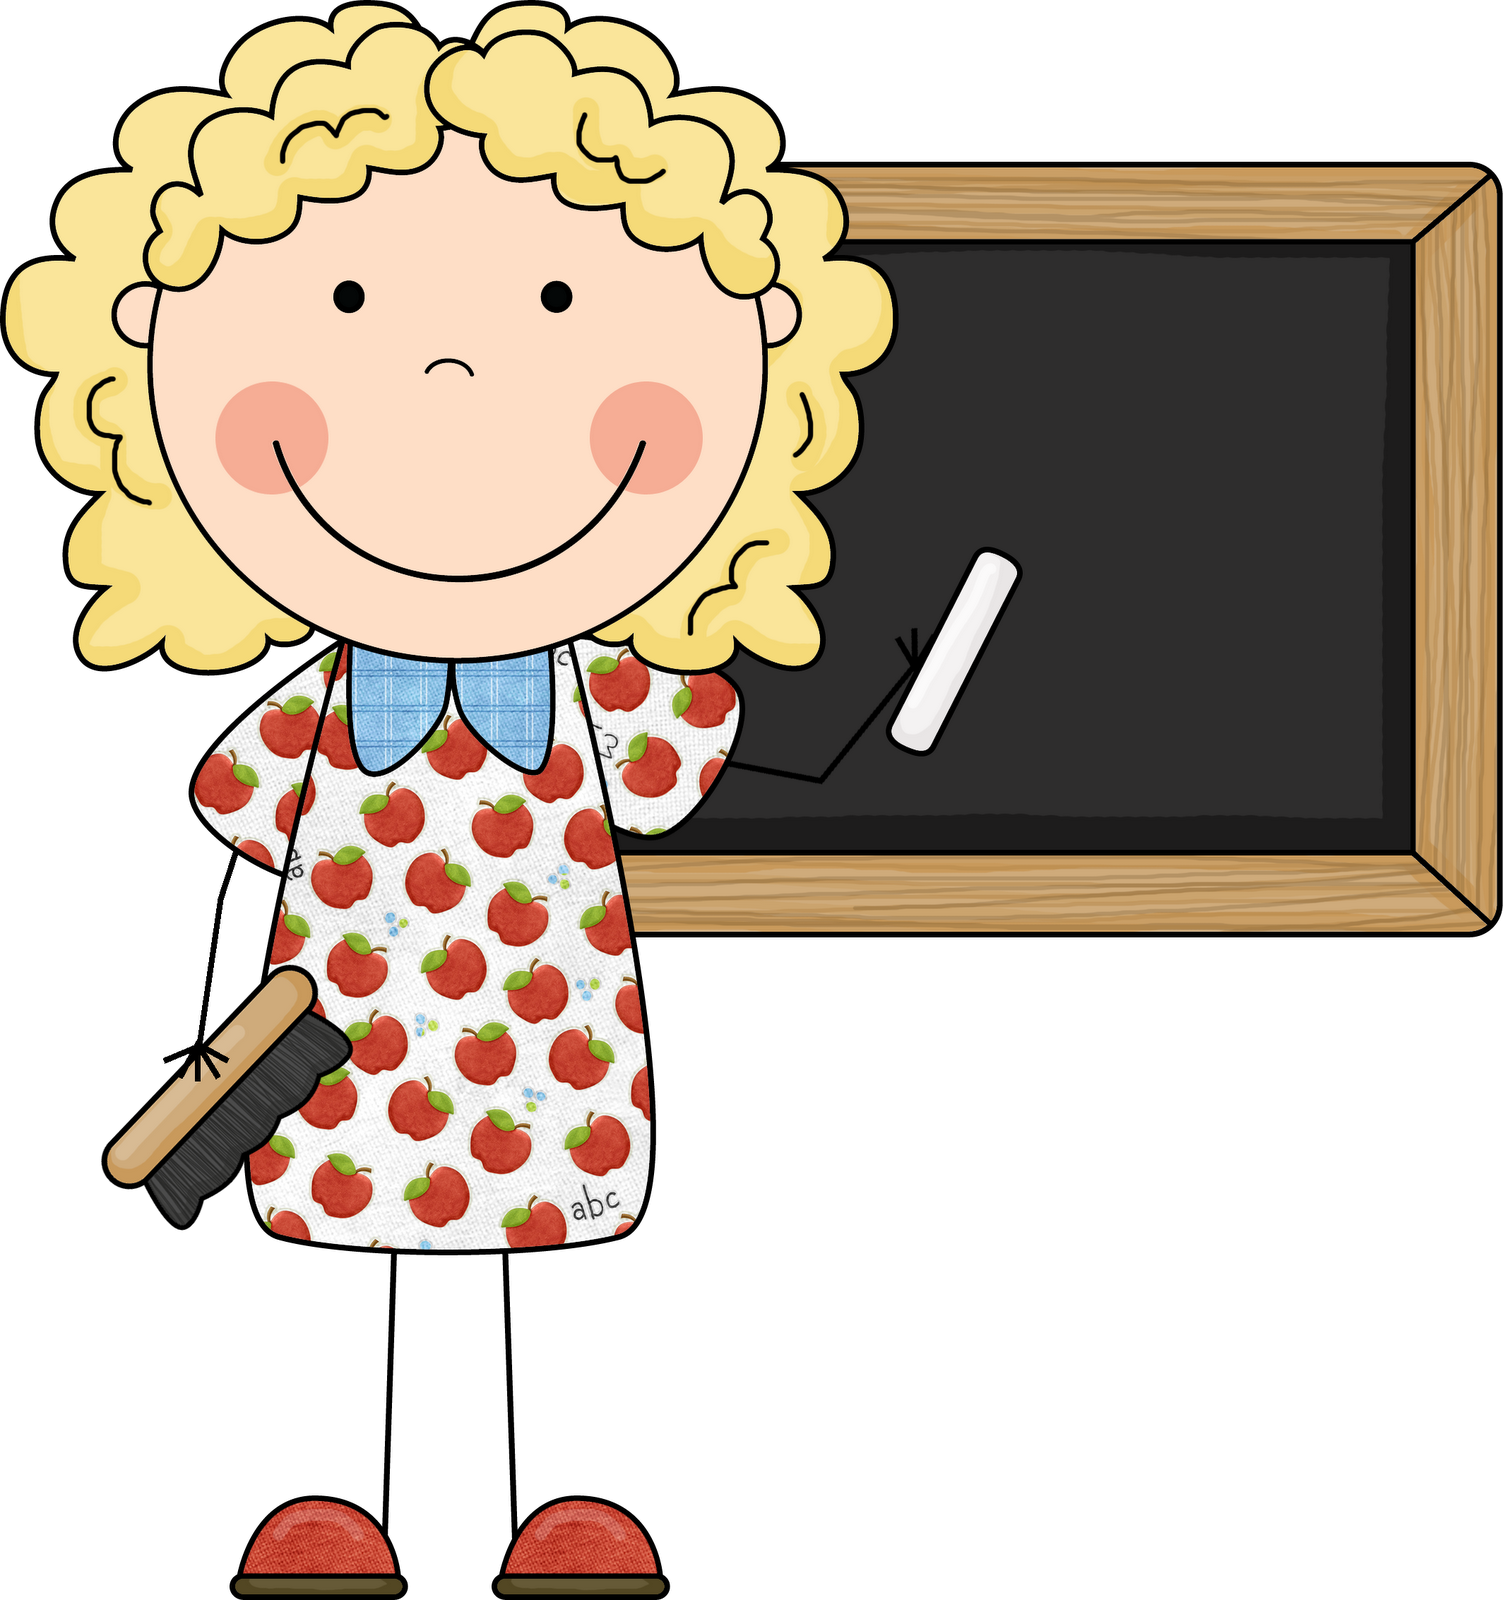 Kindergarten Teacher Clip Art | Clipart library - Free Clipart Images